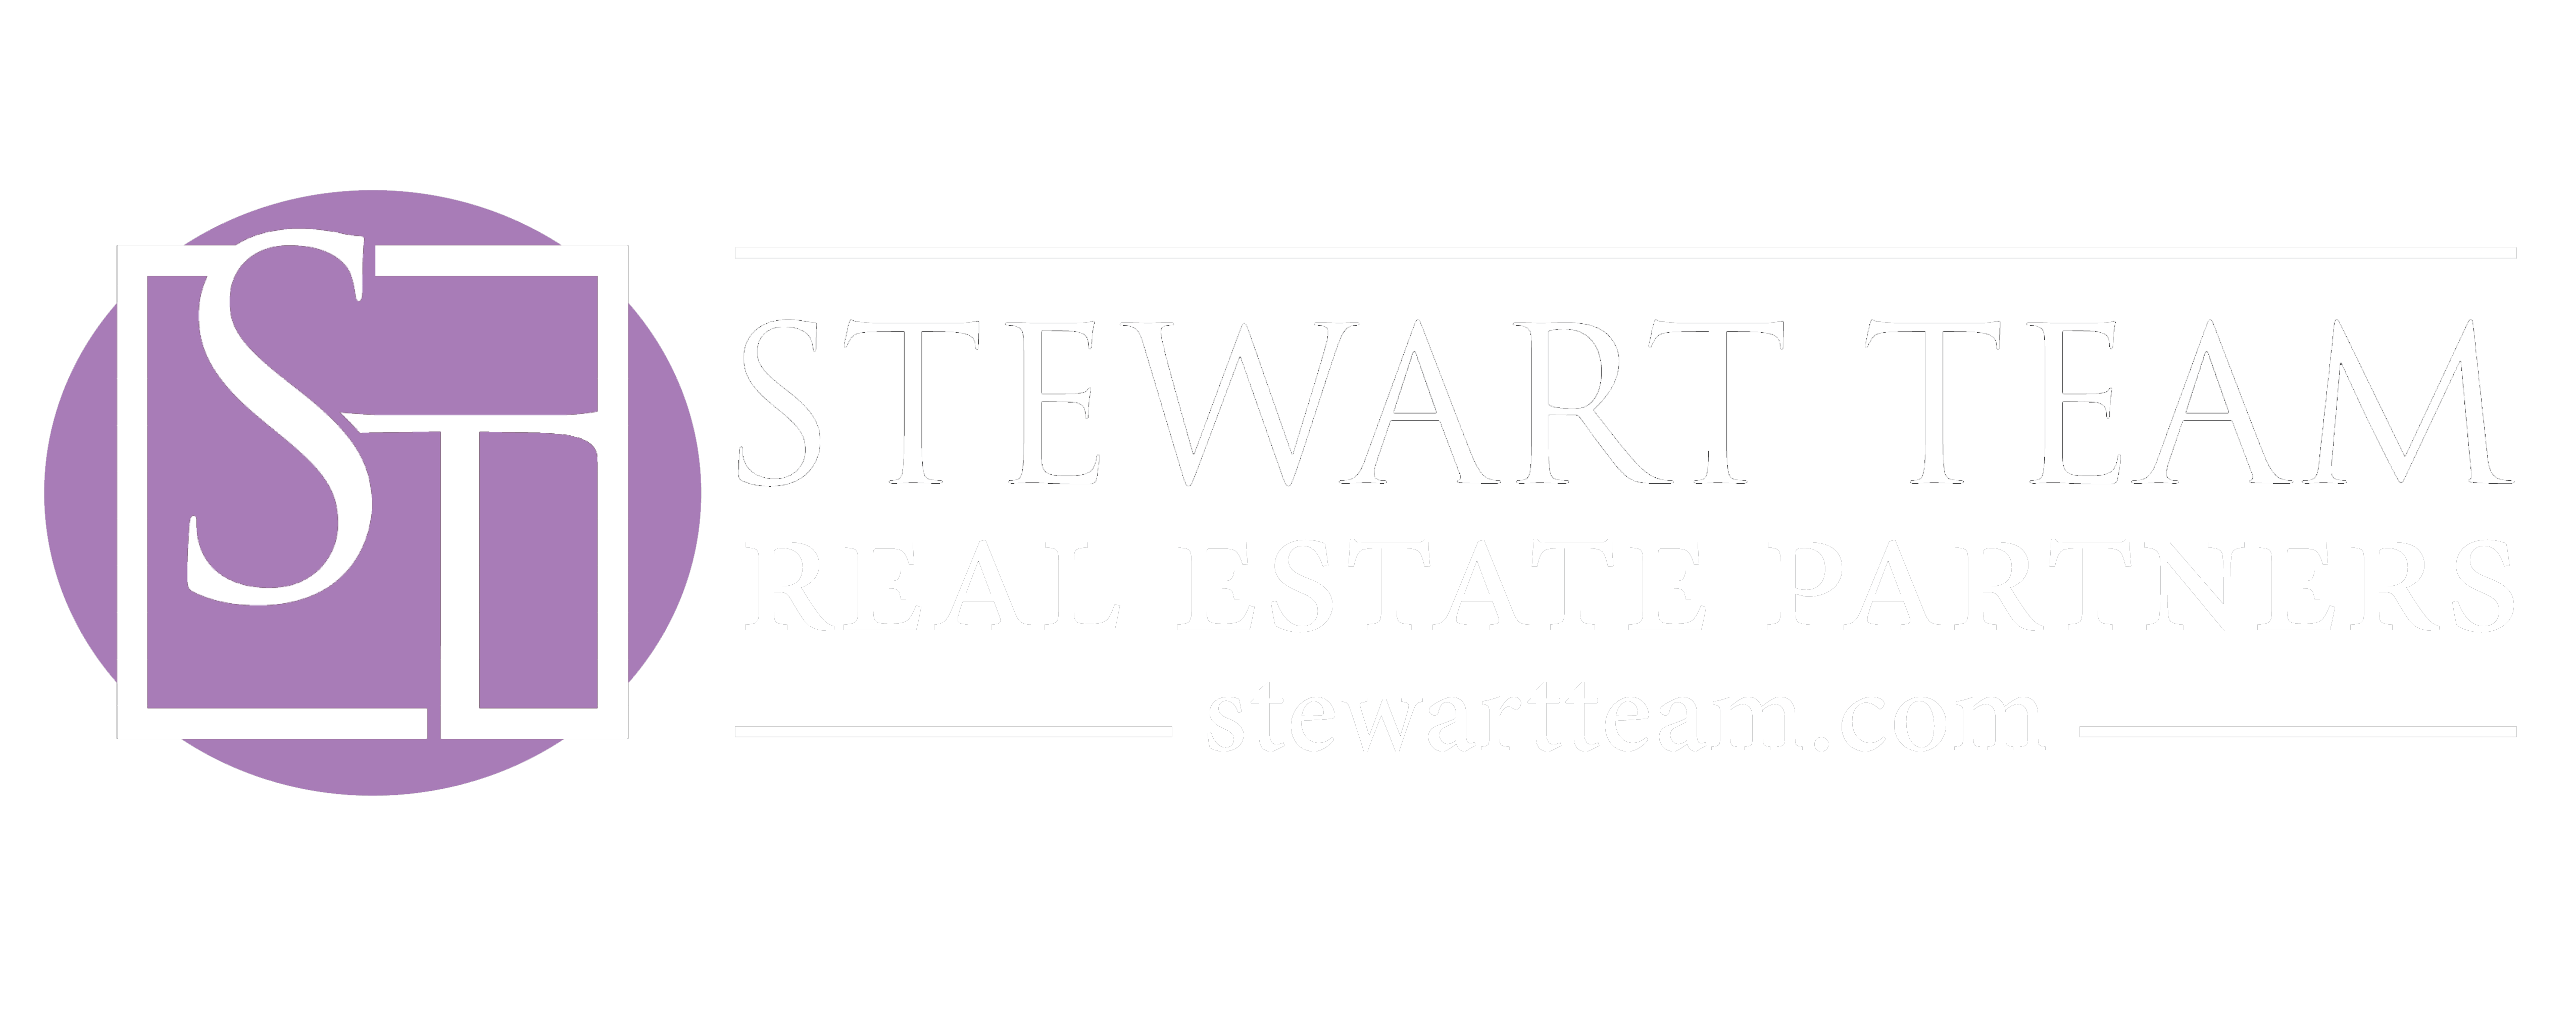 Stewart Team Real Estate Partners